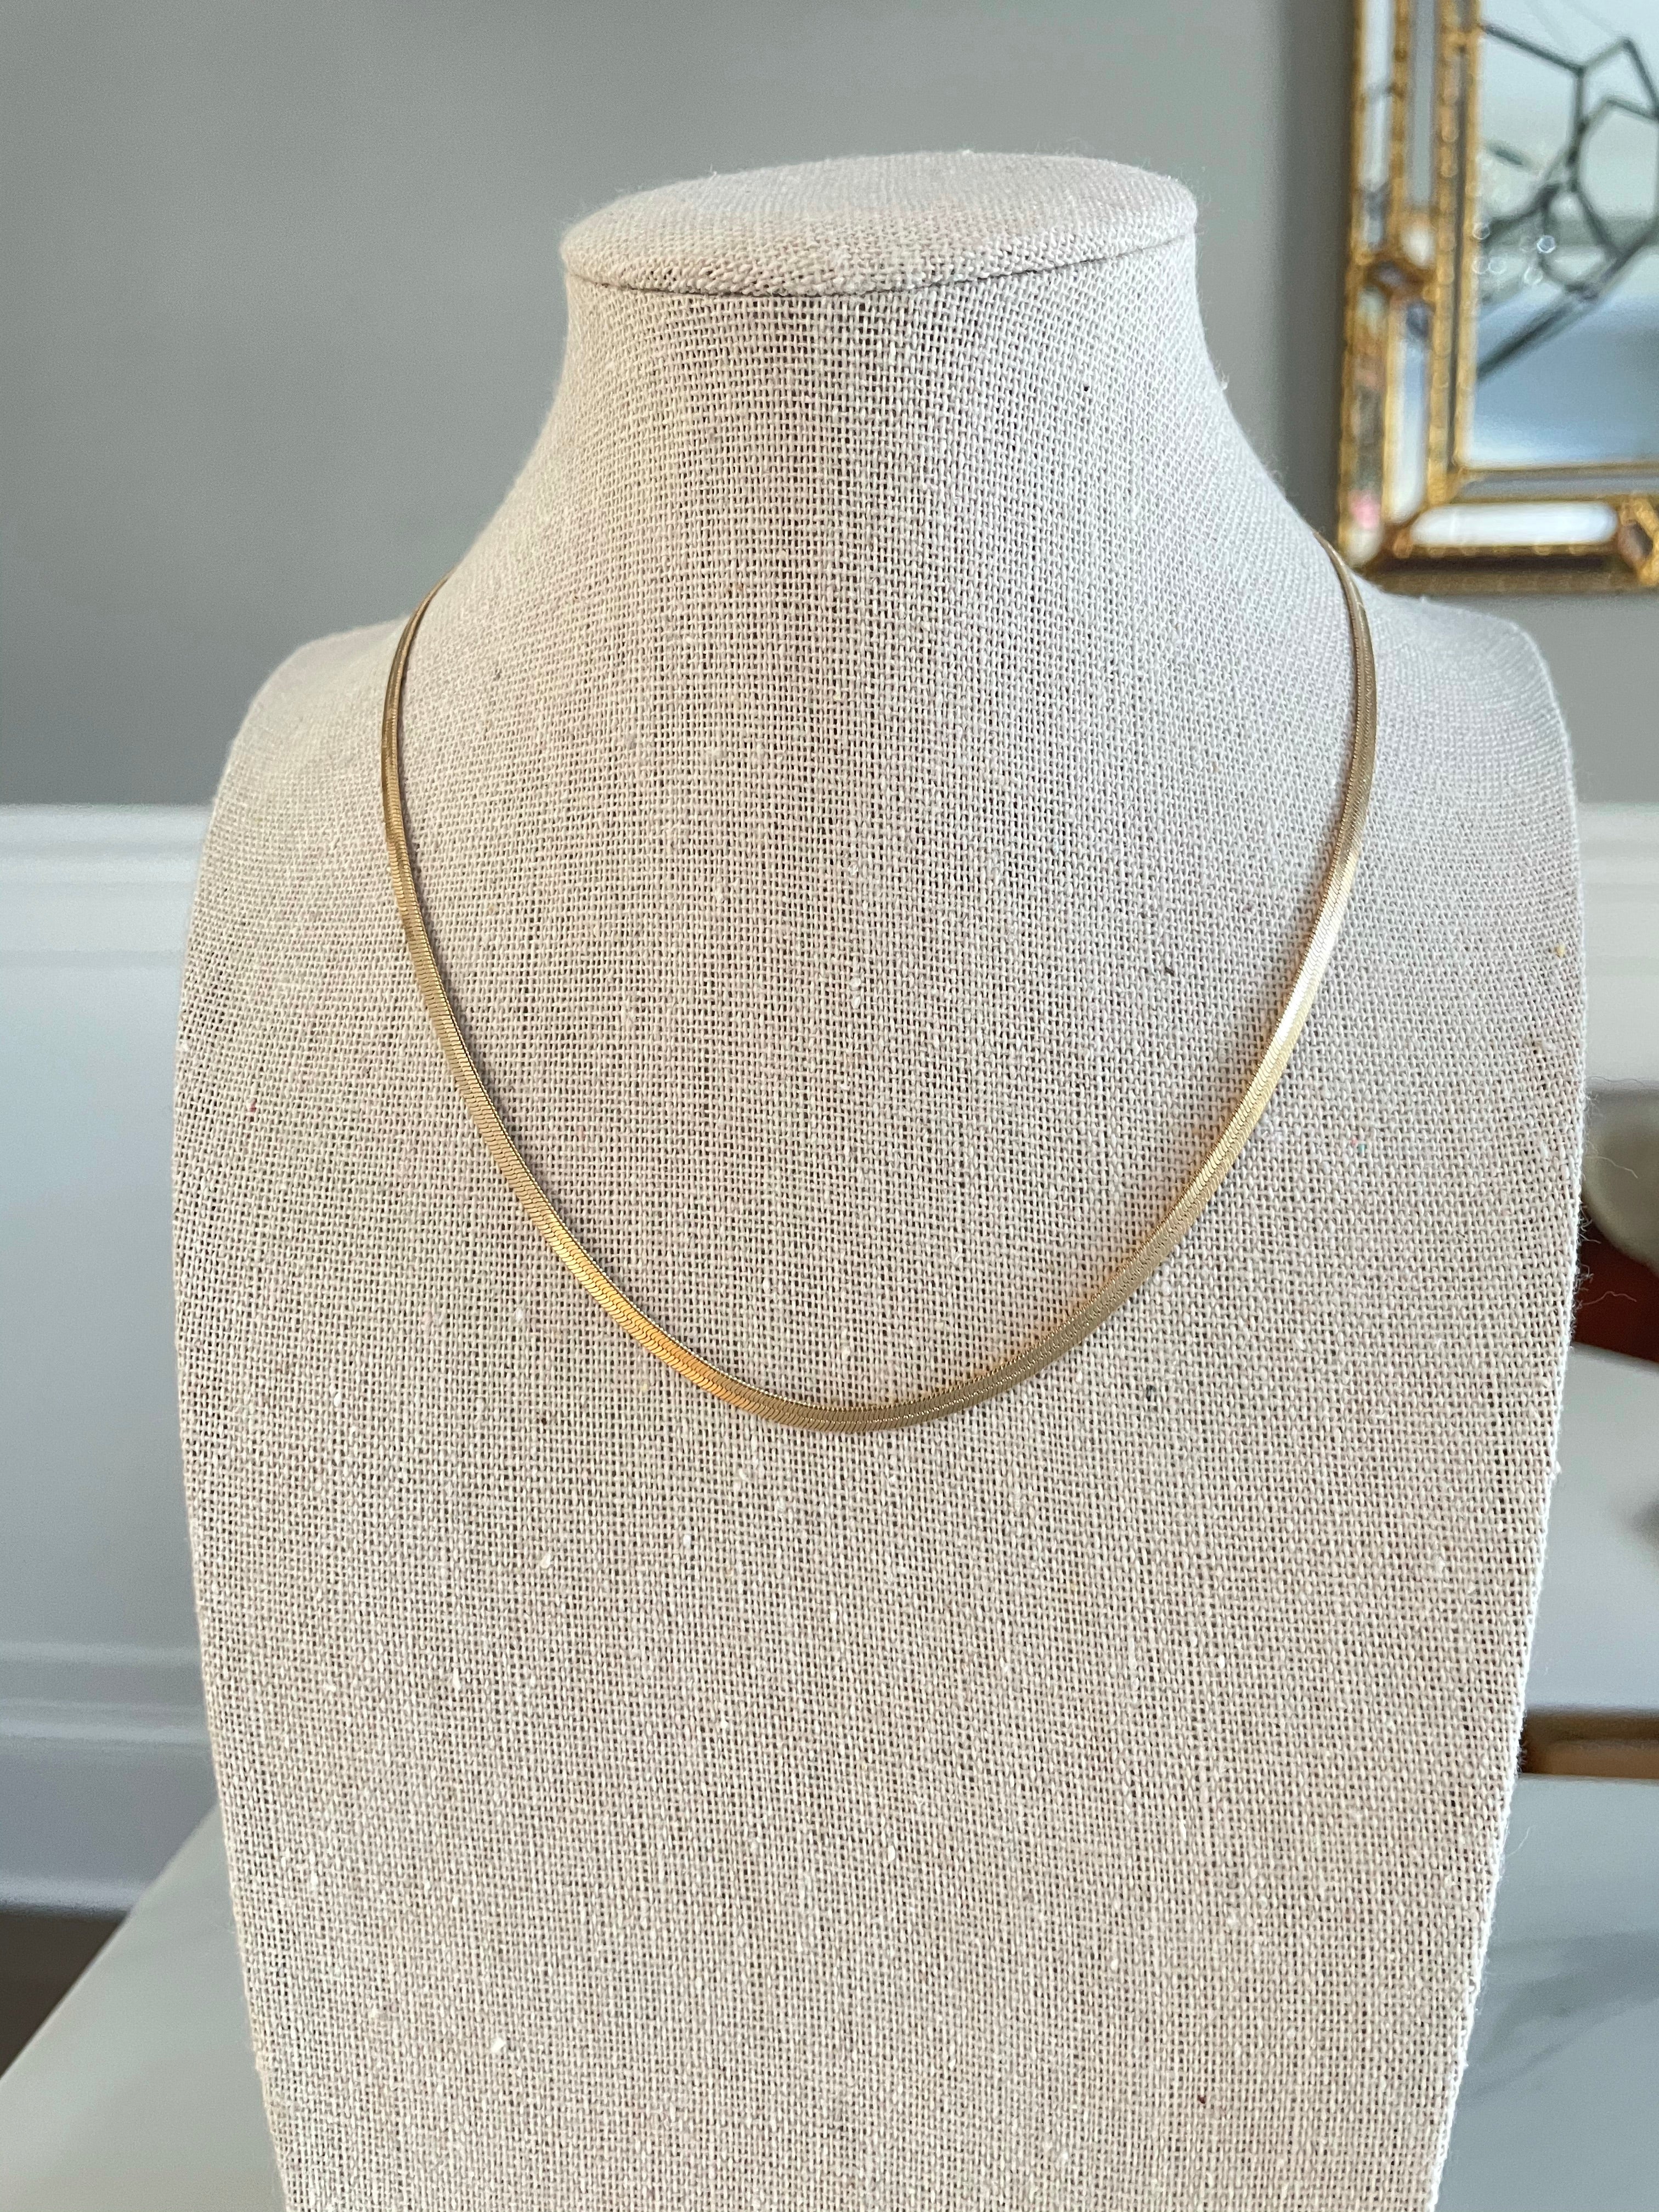 Gold Herringbone Necklace, various sizes